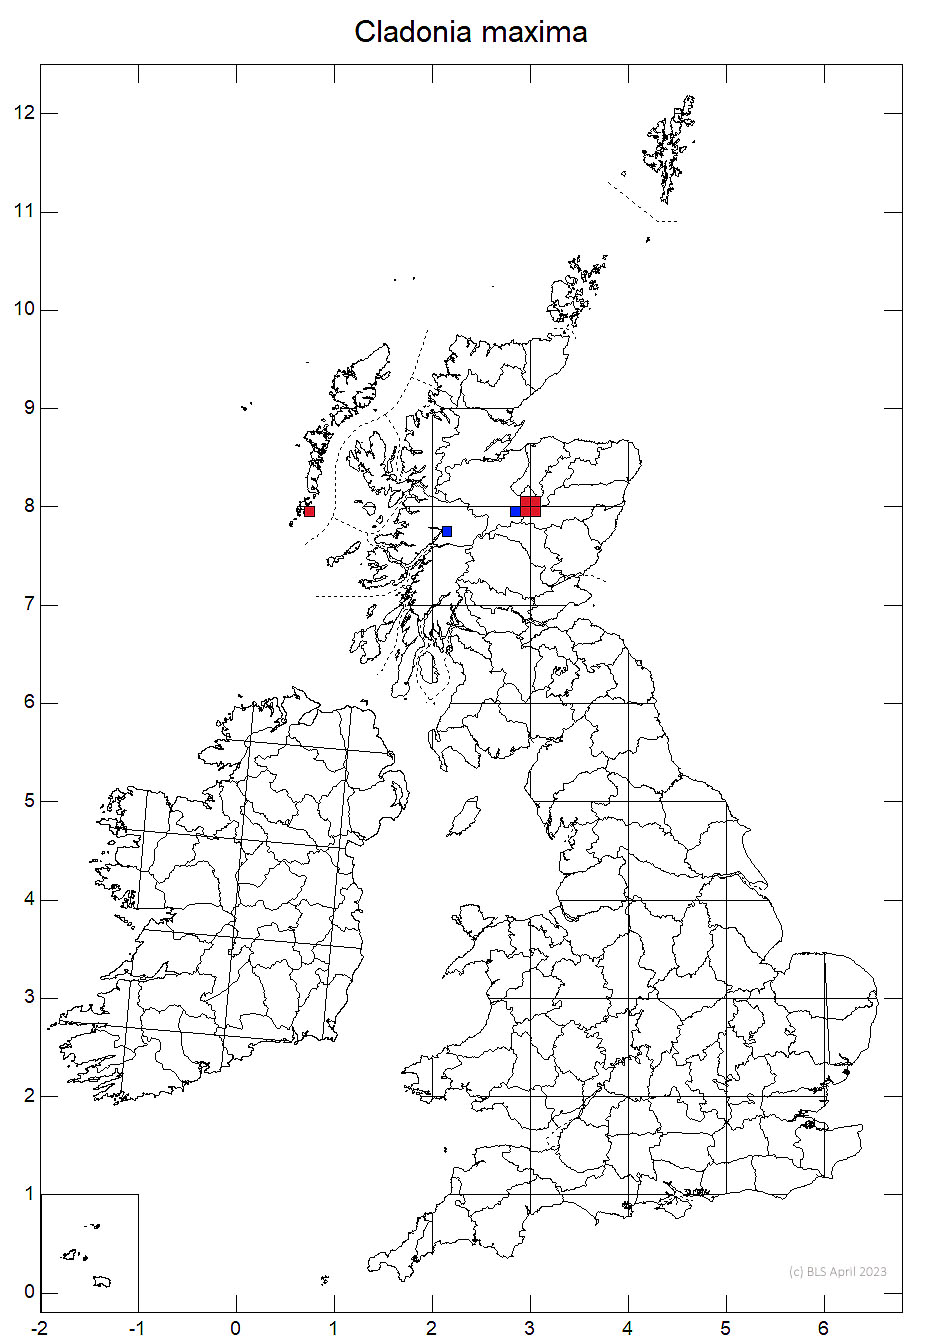 Cladonia maxima 10km sq distribution map